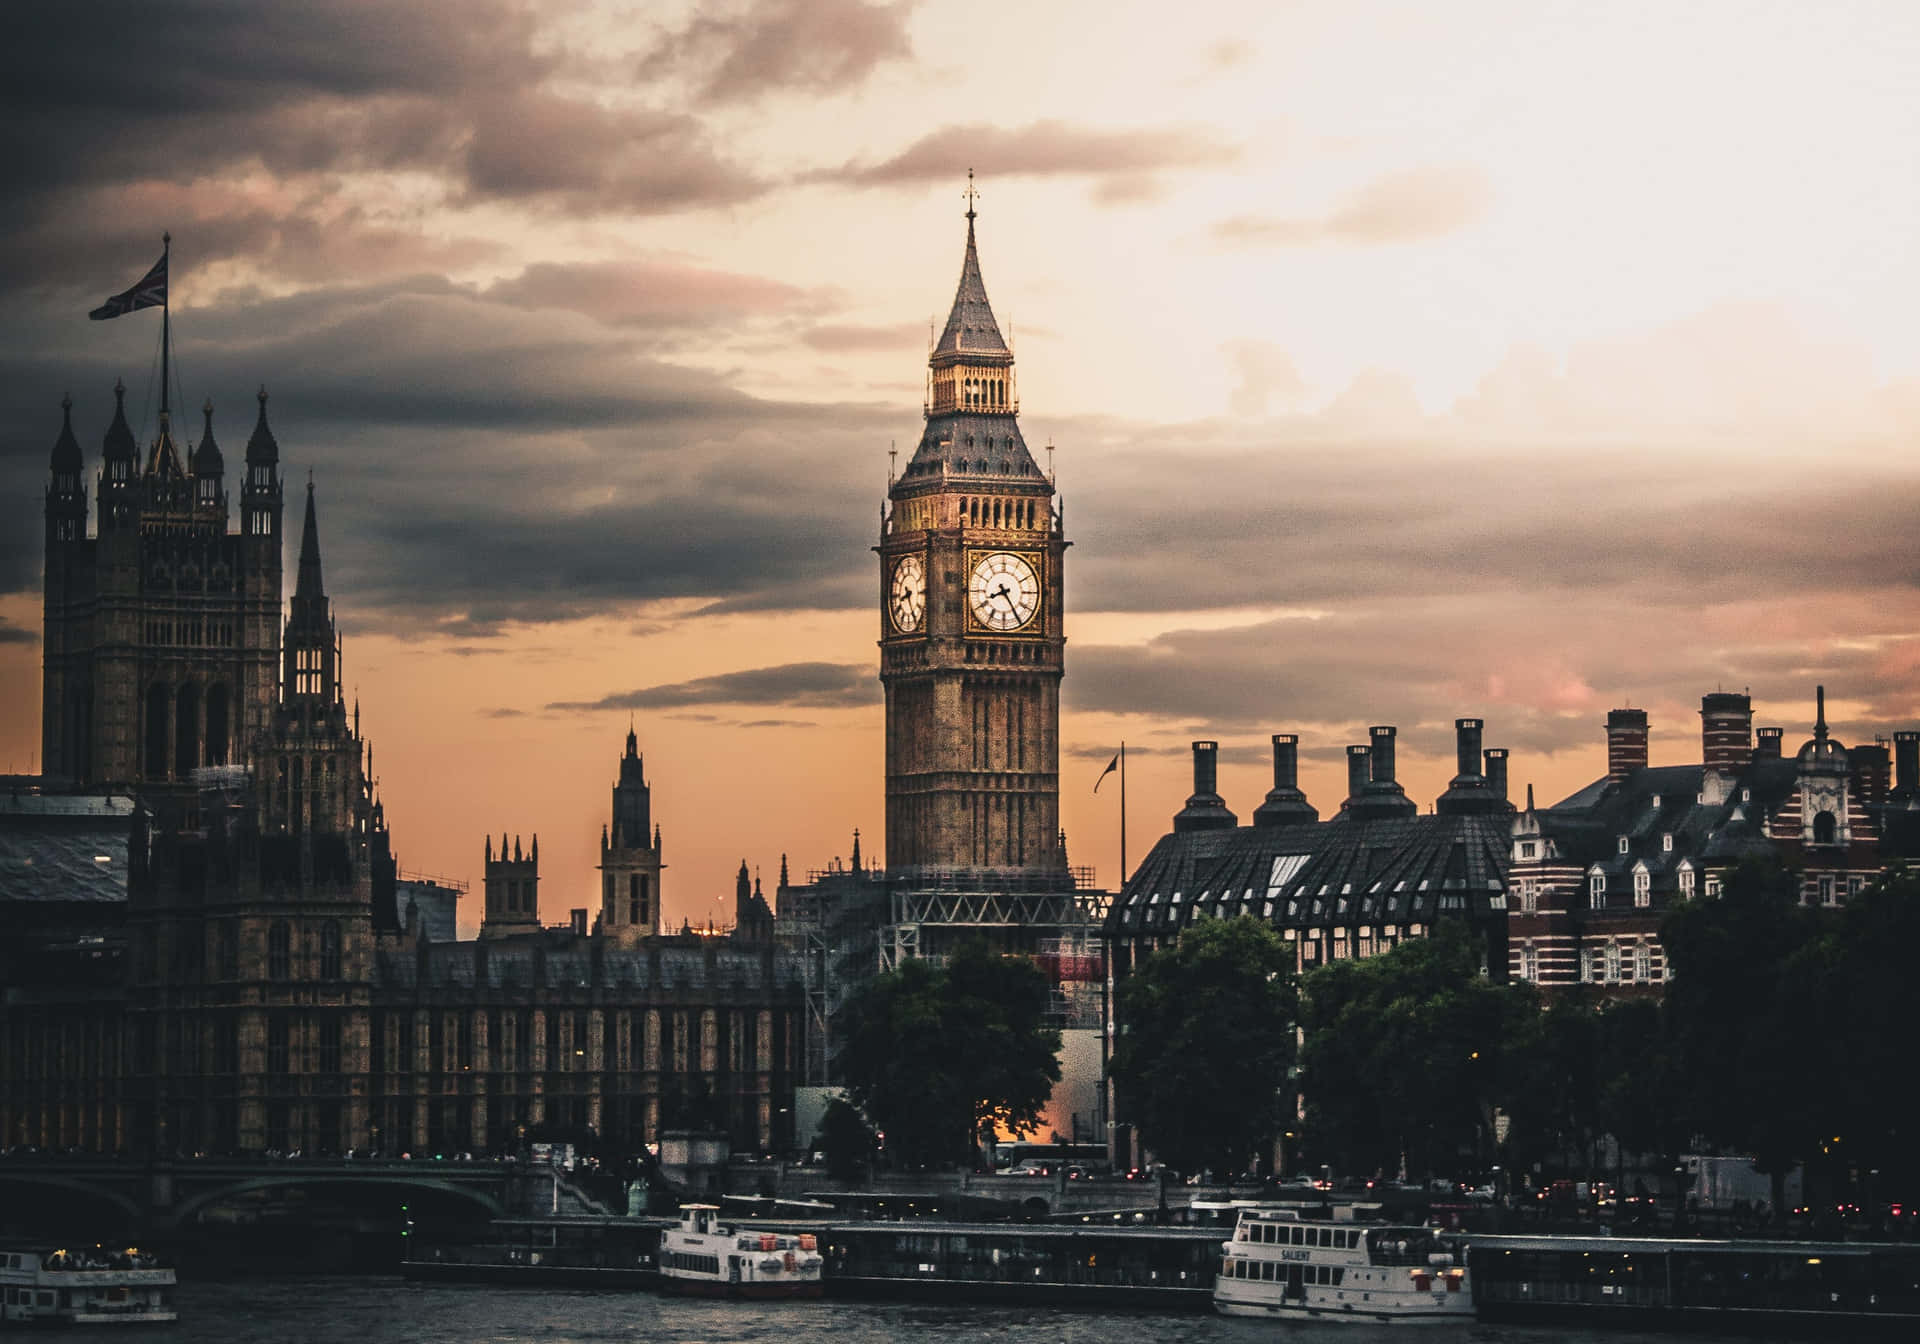 A Big Ben Clock Tower In London